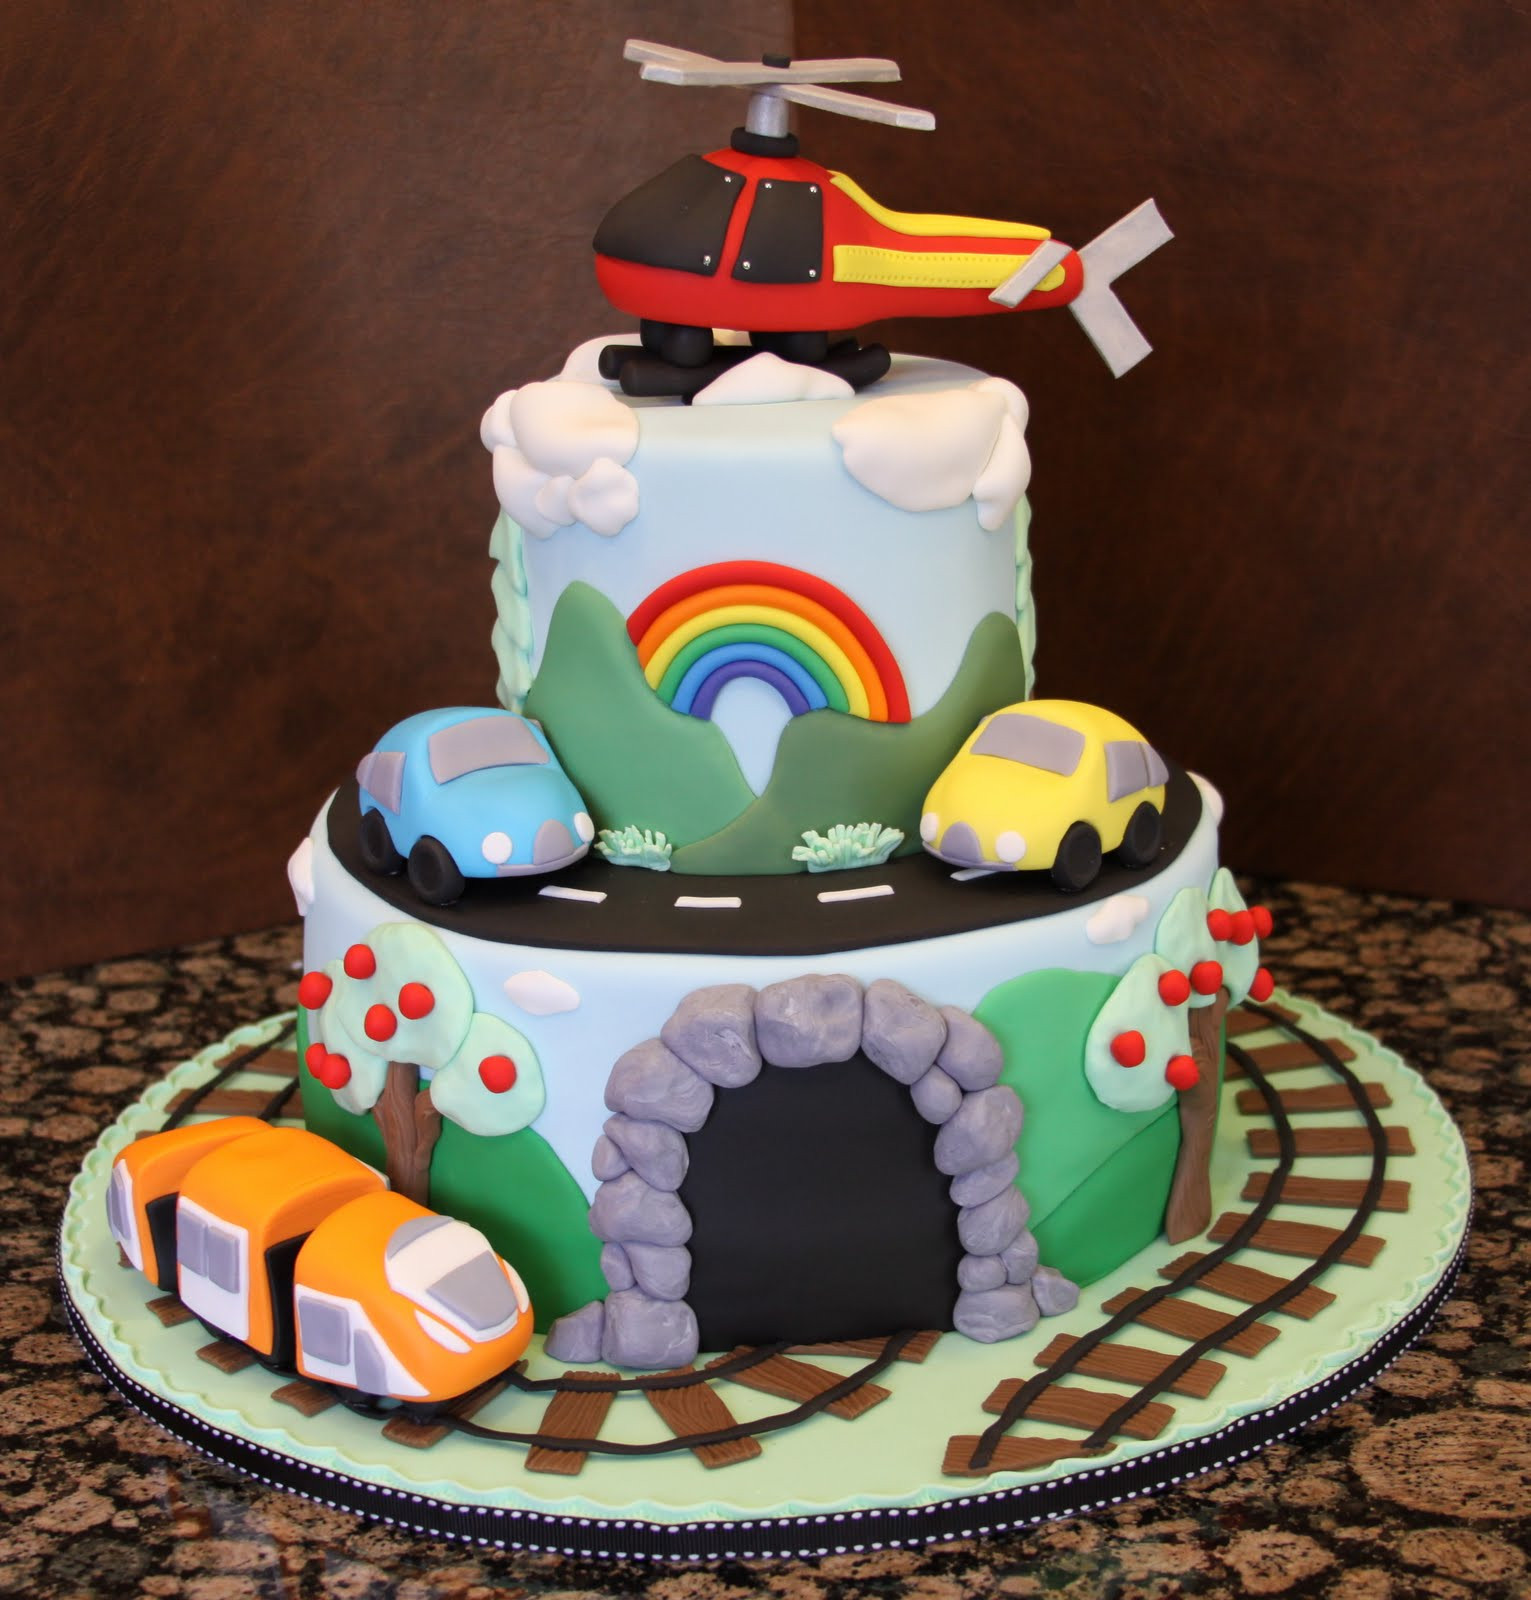 Free Birthday Cake Pictures
 Transportation Birthday Cake